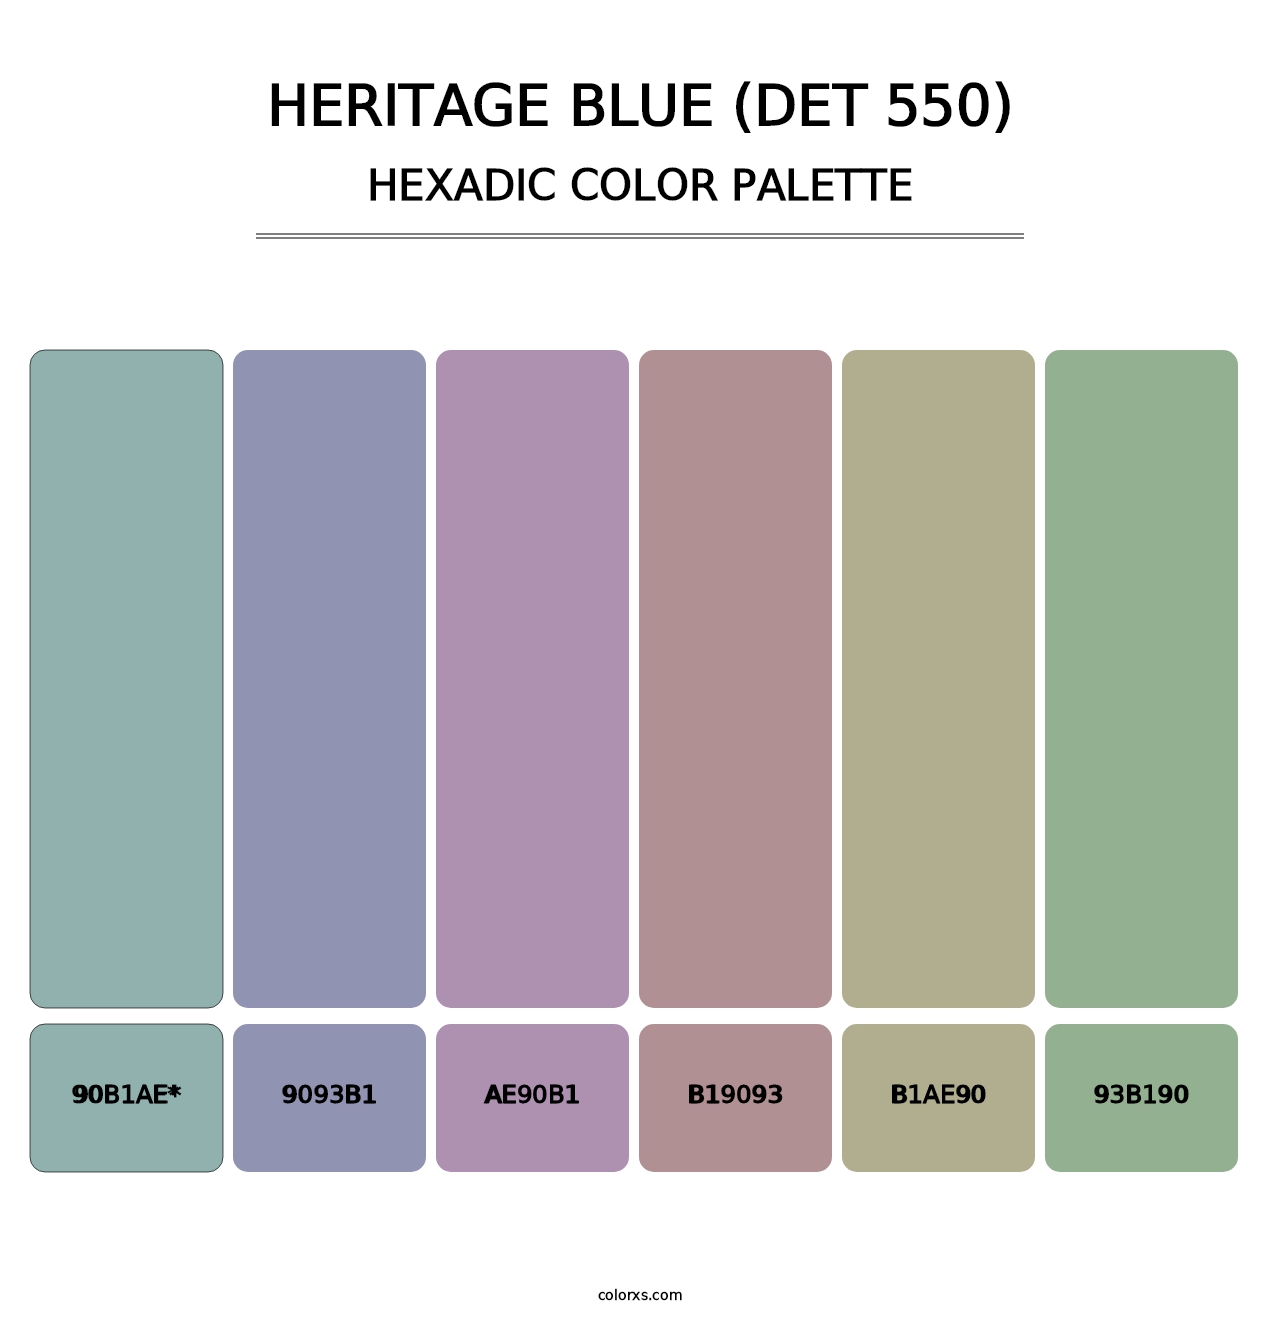 Heritage Blue (DET 550) - Hexadic Color Palette